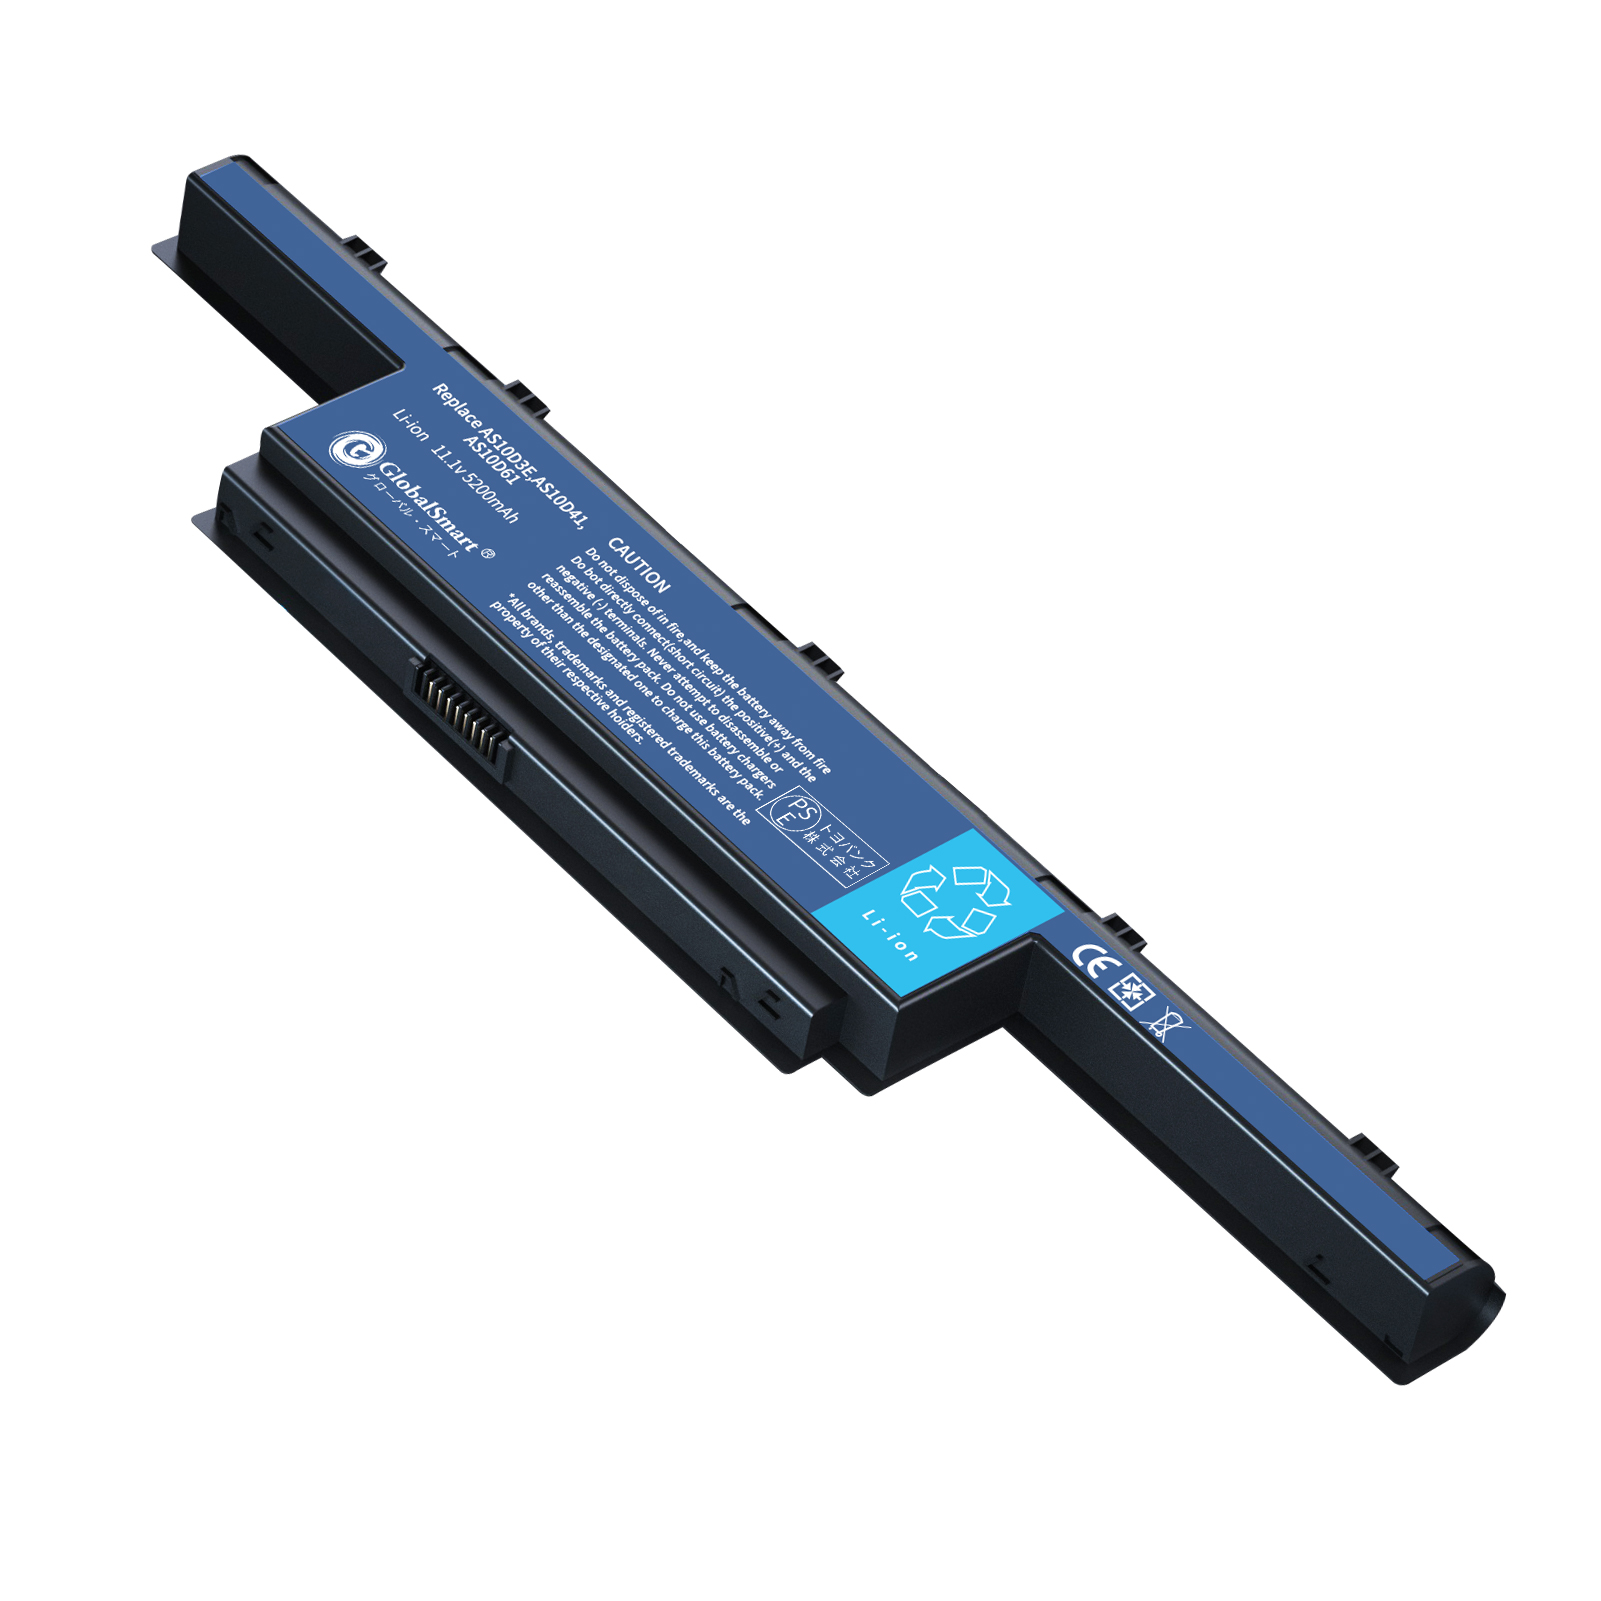 ACER エイサー EasyNote TM99 WIR 交換用内蔵バッテリー 5200mAh 11.1V 互換バッテリー PSE認証済製品